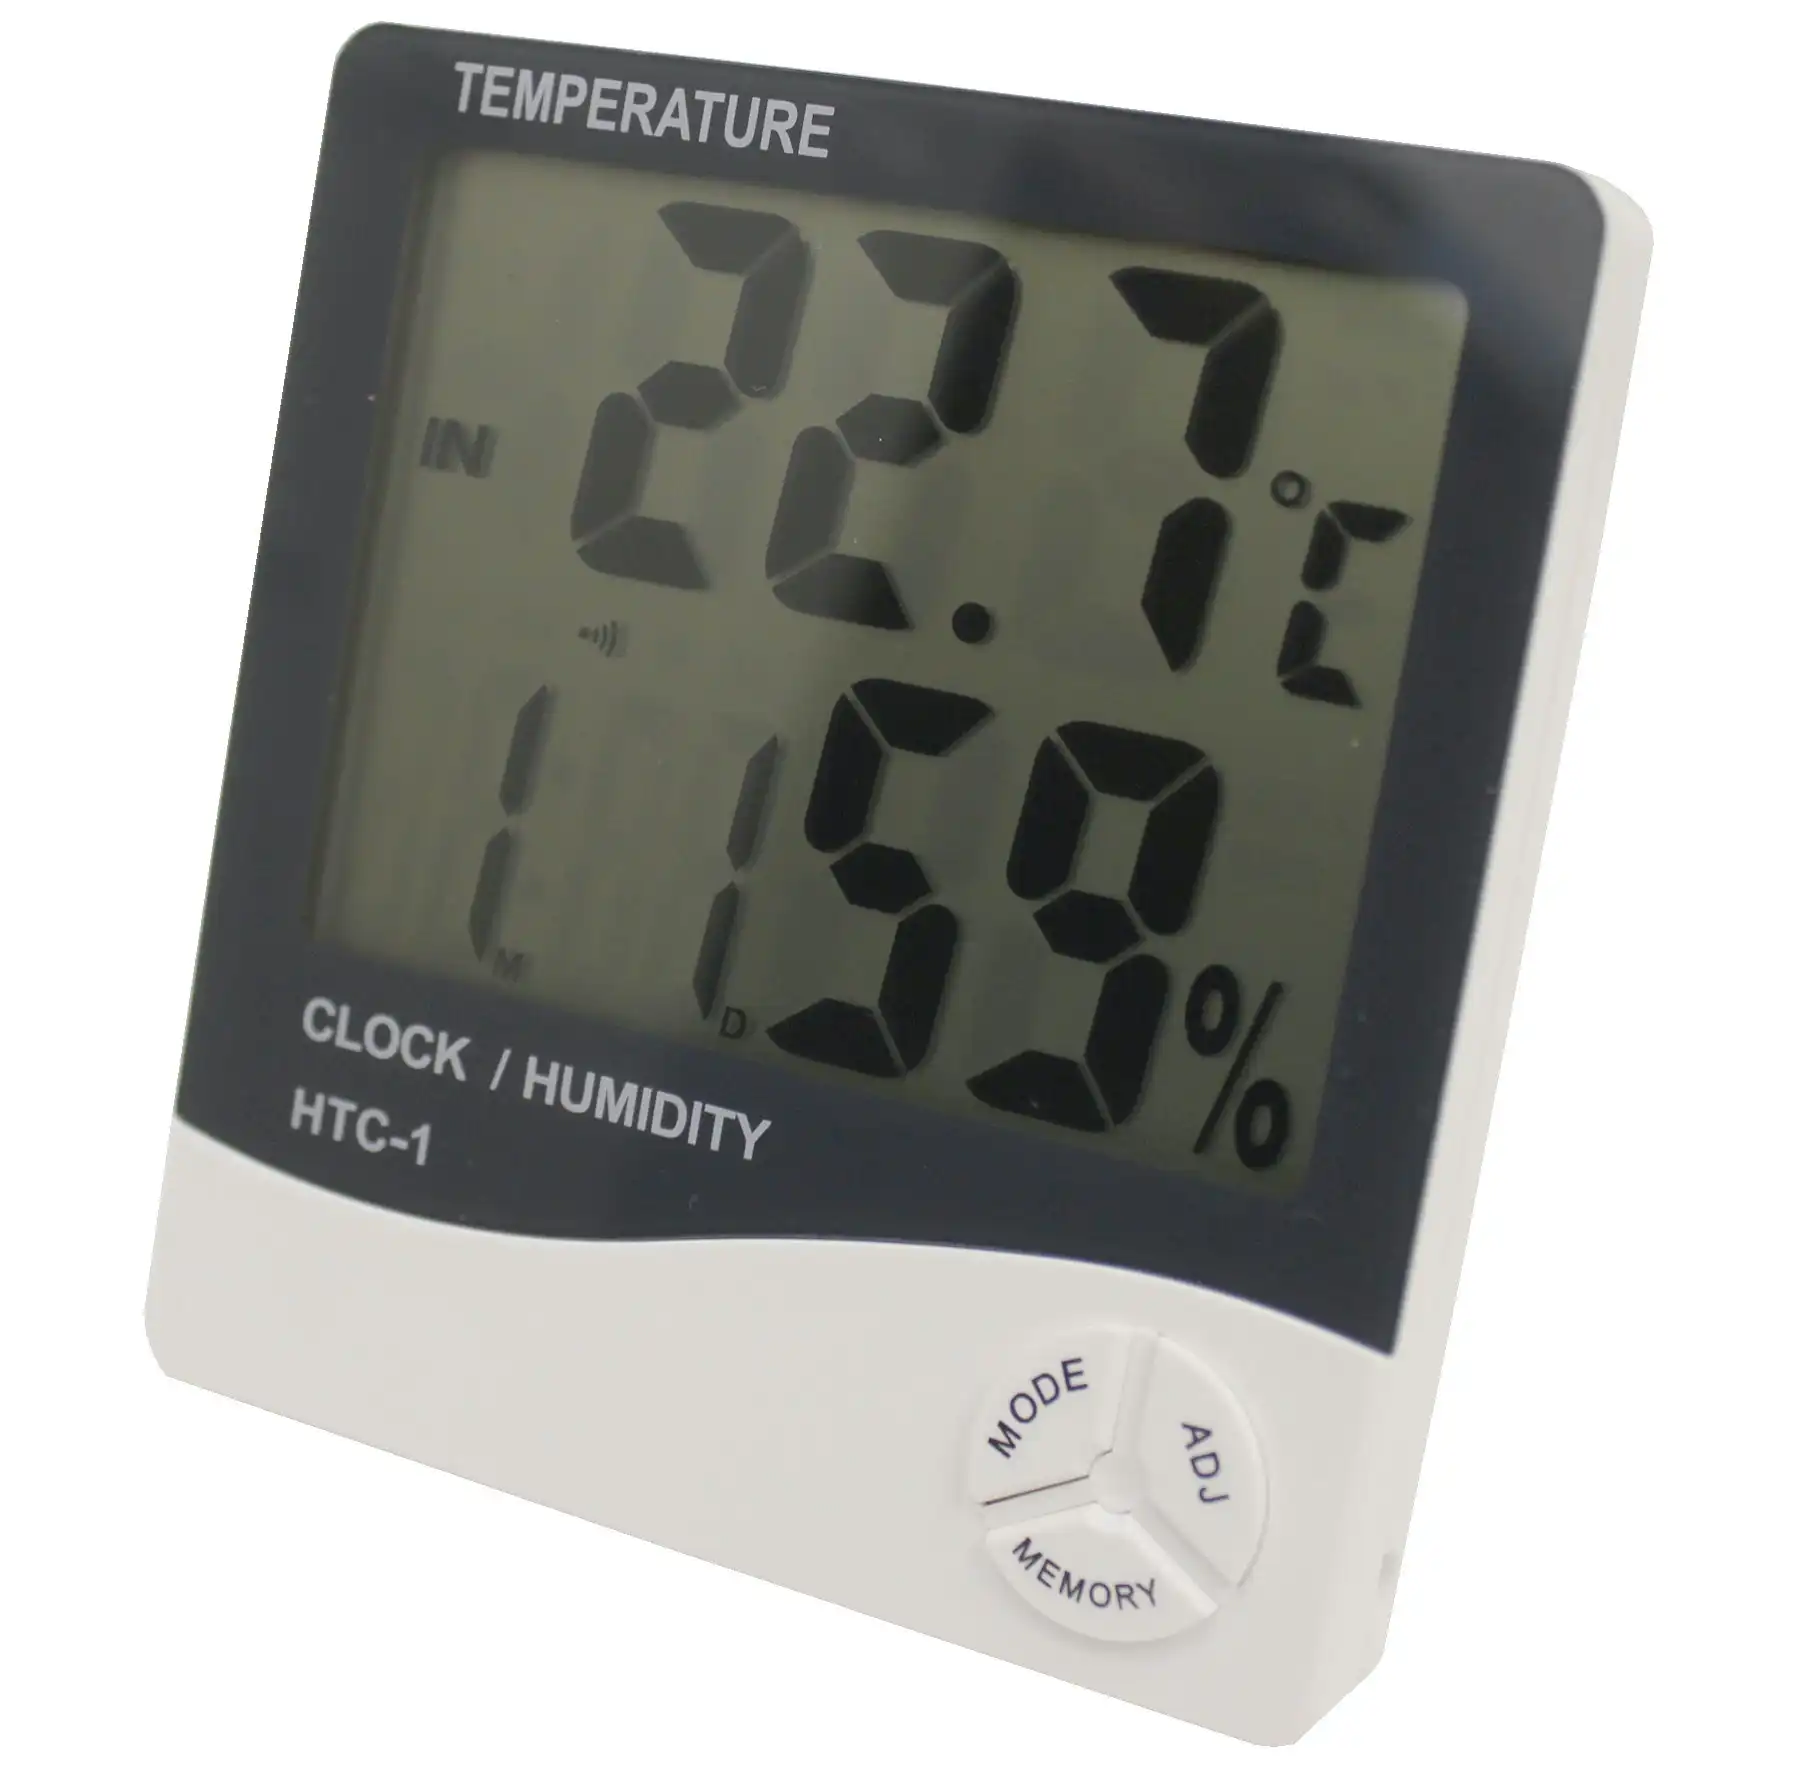 TODO Digital Thermometer Hygrometer Alarm Clock Temp Humidity Large Lcd Display